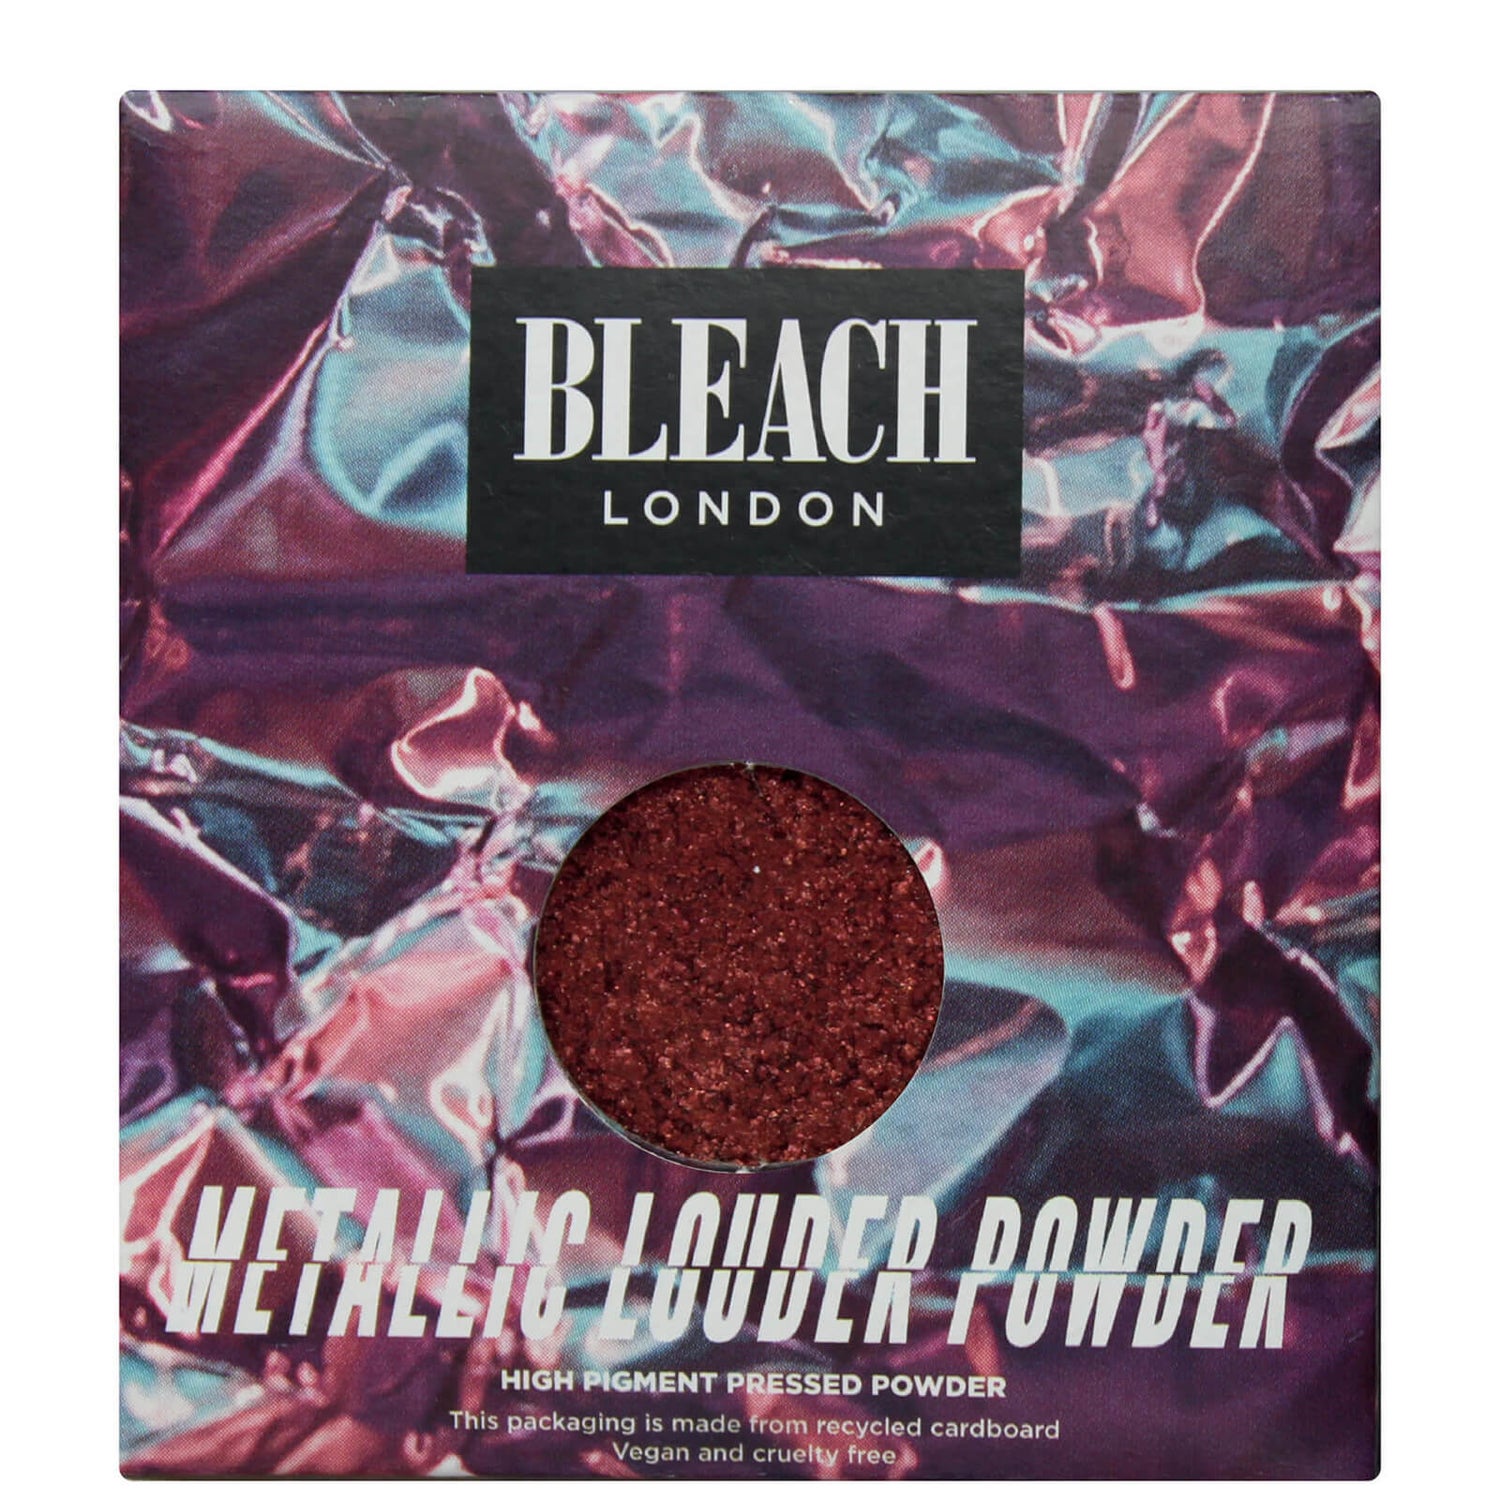 BLEACH LONDON Metallic Louder Powder cień do powiek - Isr 4 Me